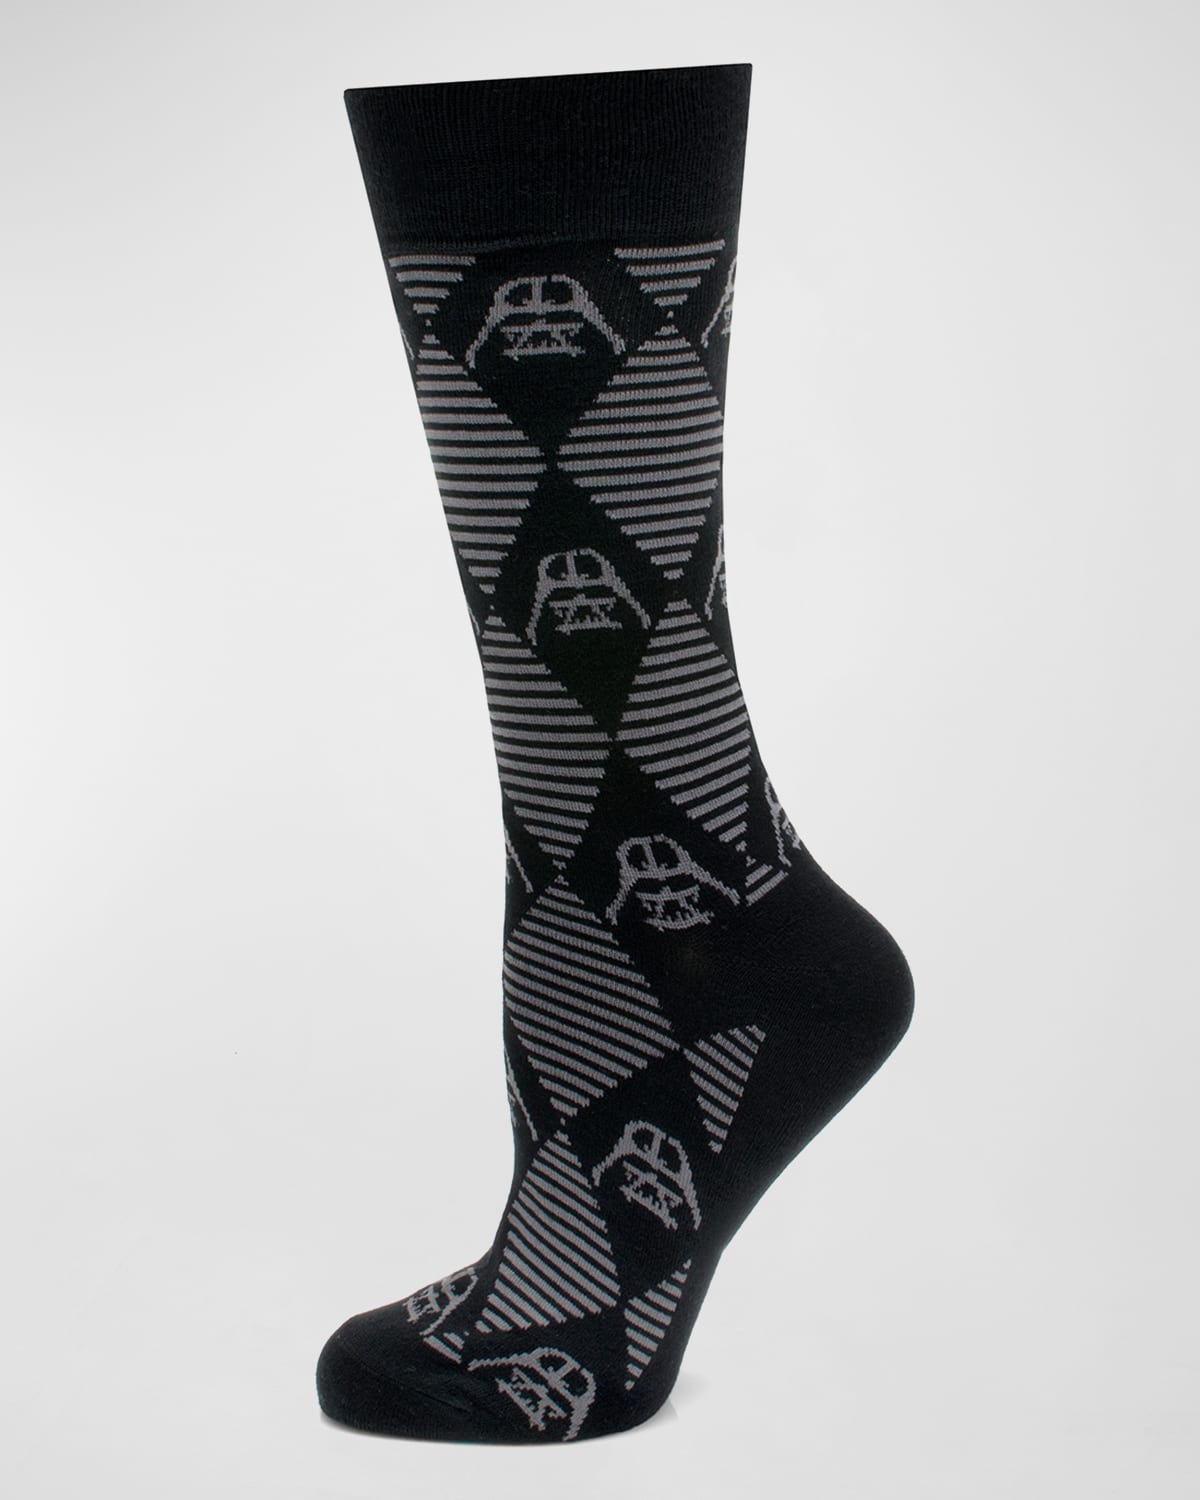 Cufflinks, Inc Star Wars Darth Vader Argyle Socks In Black